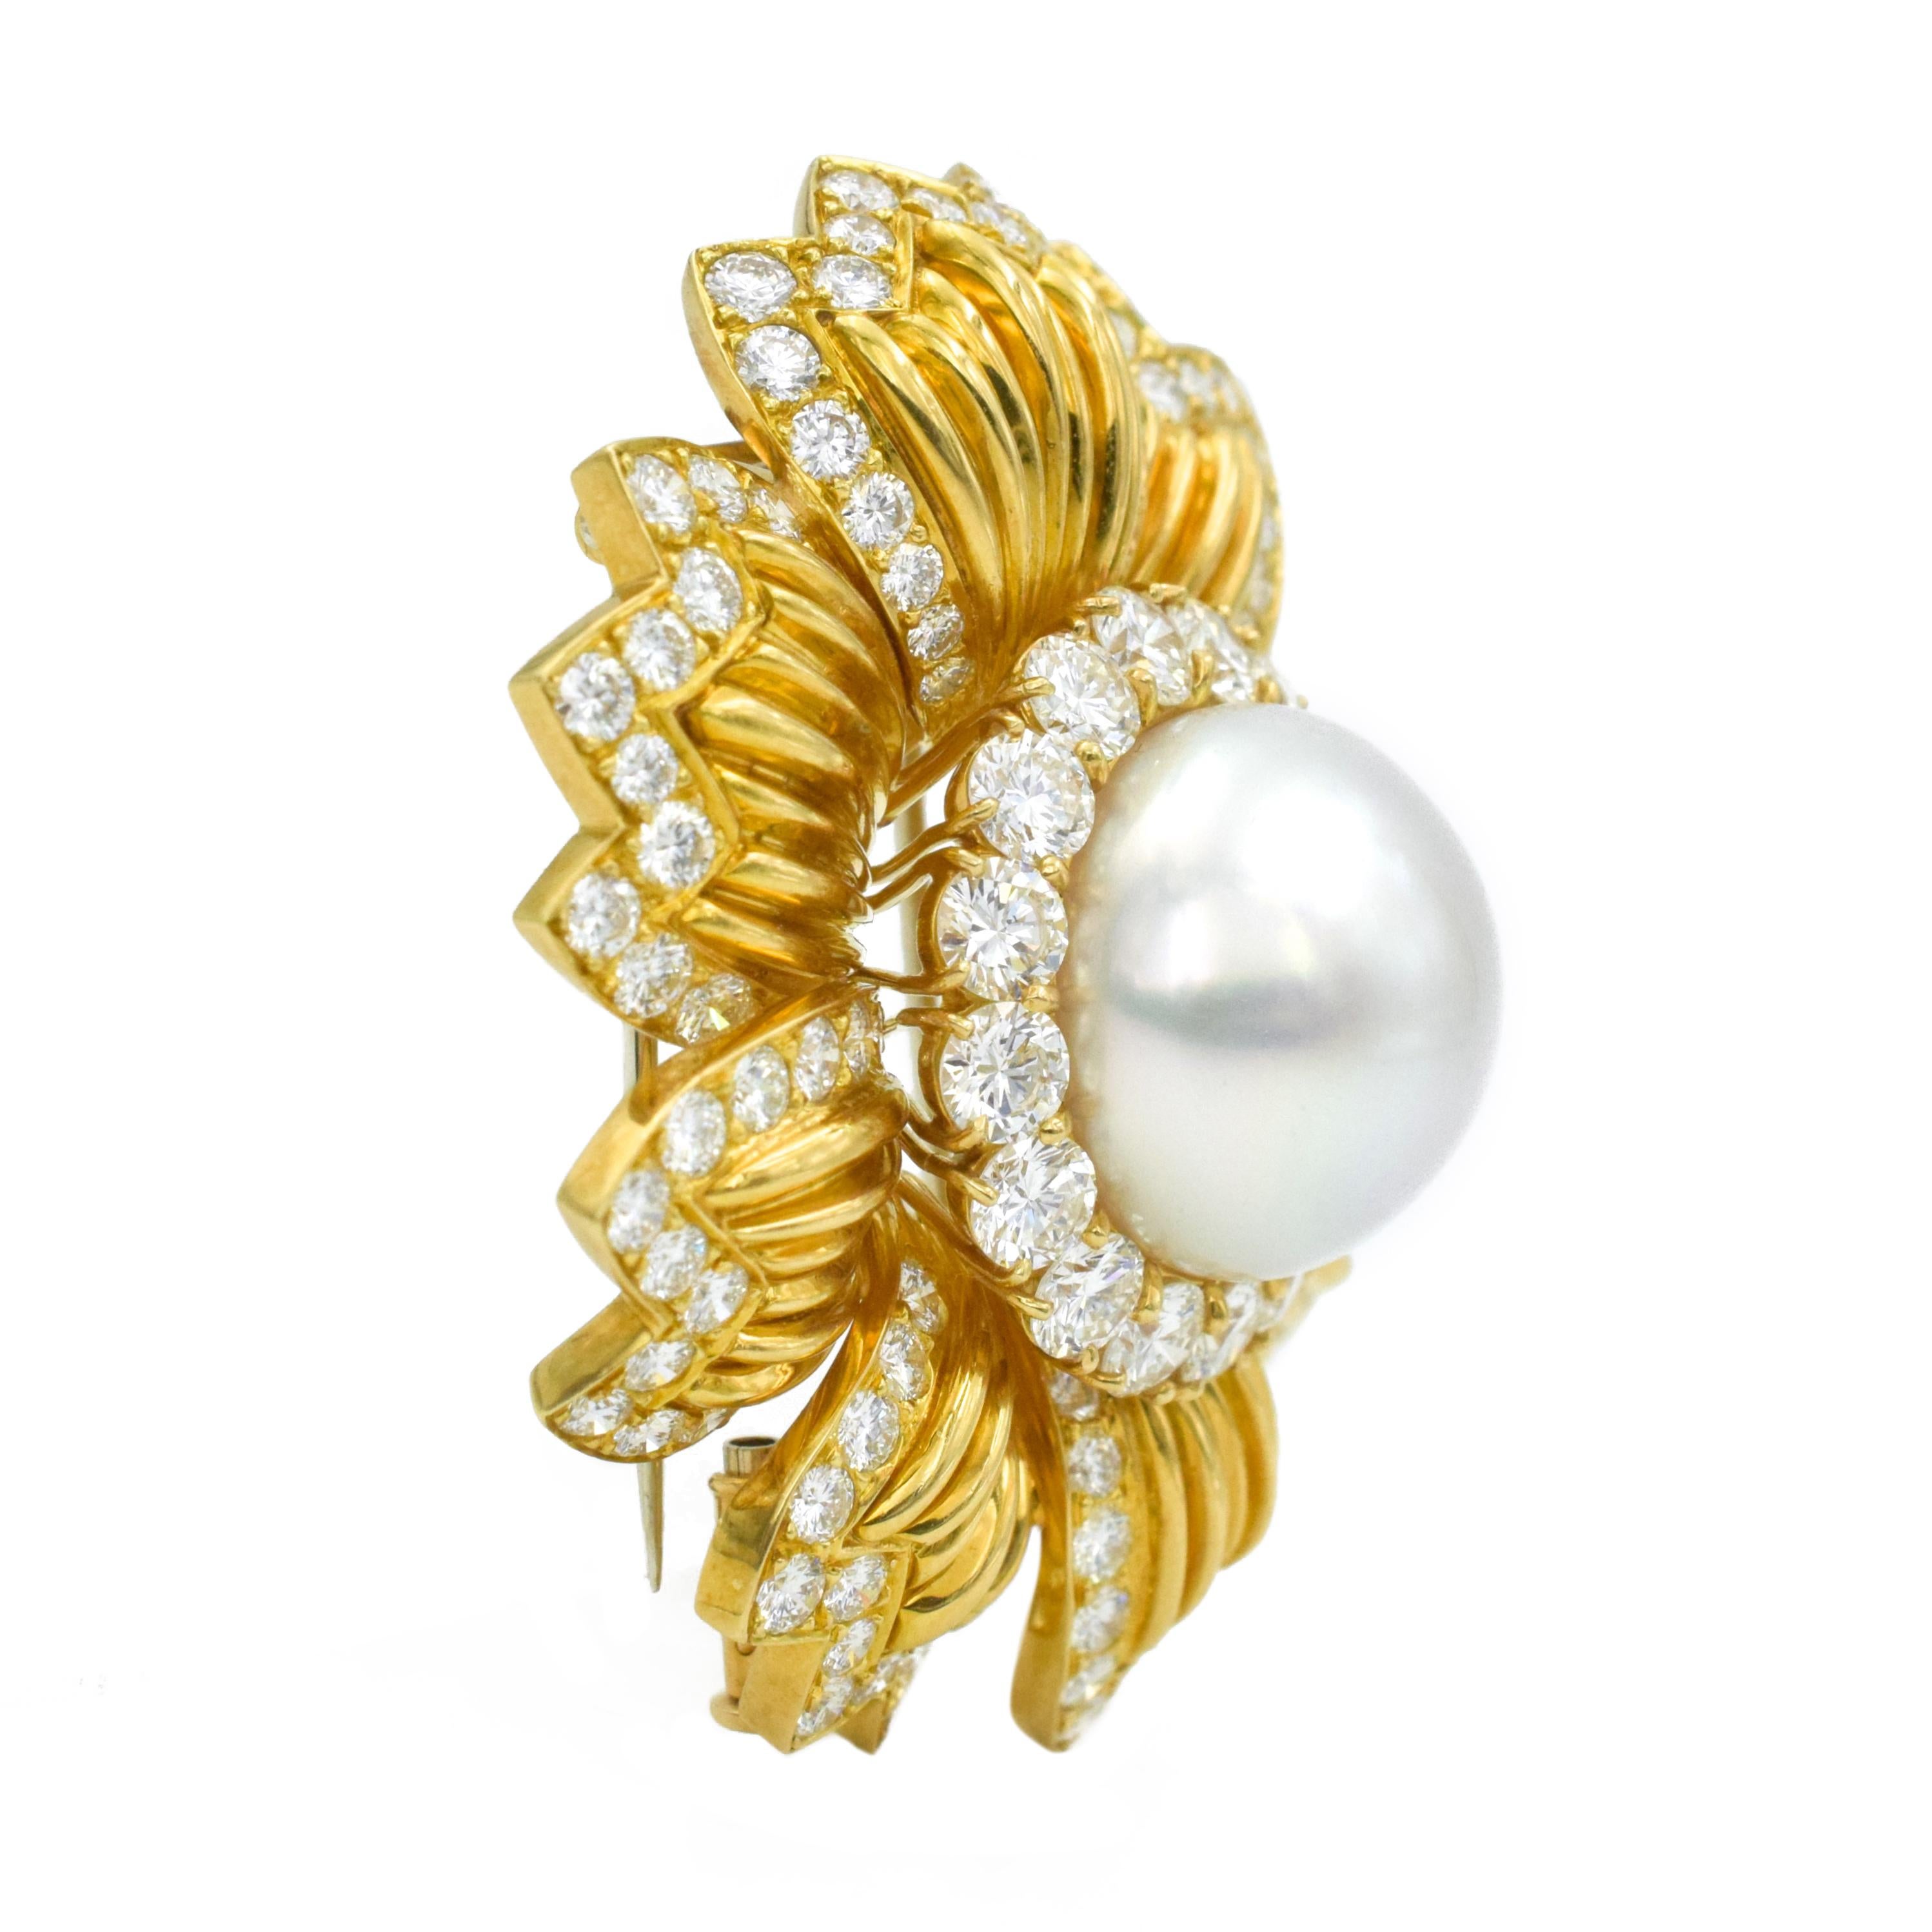 Women's Van Cleef & Arpels South Sea Cultured Pearl and Diamond Brooch